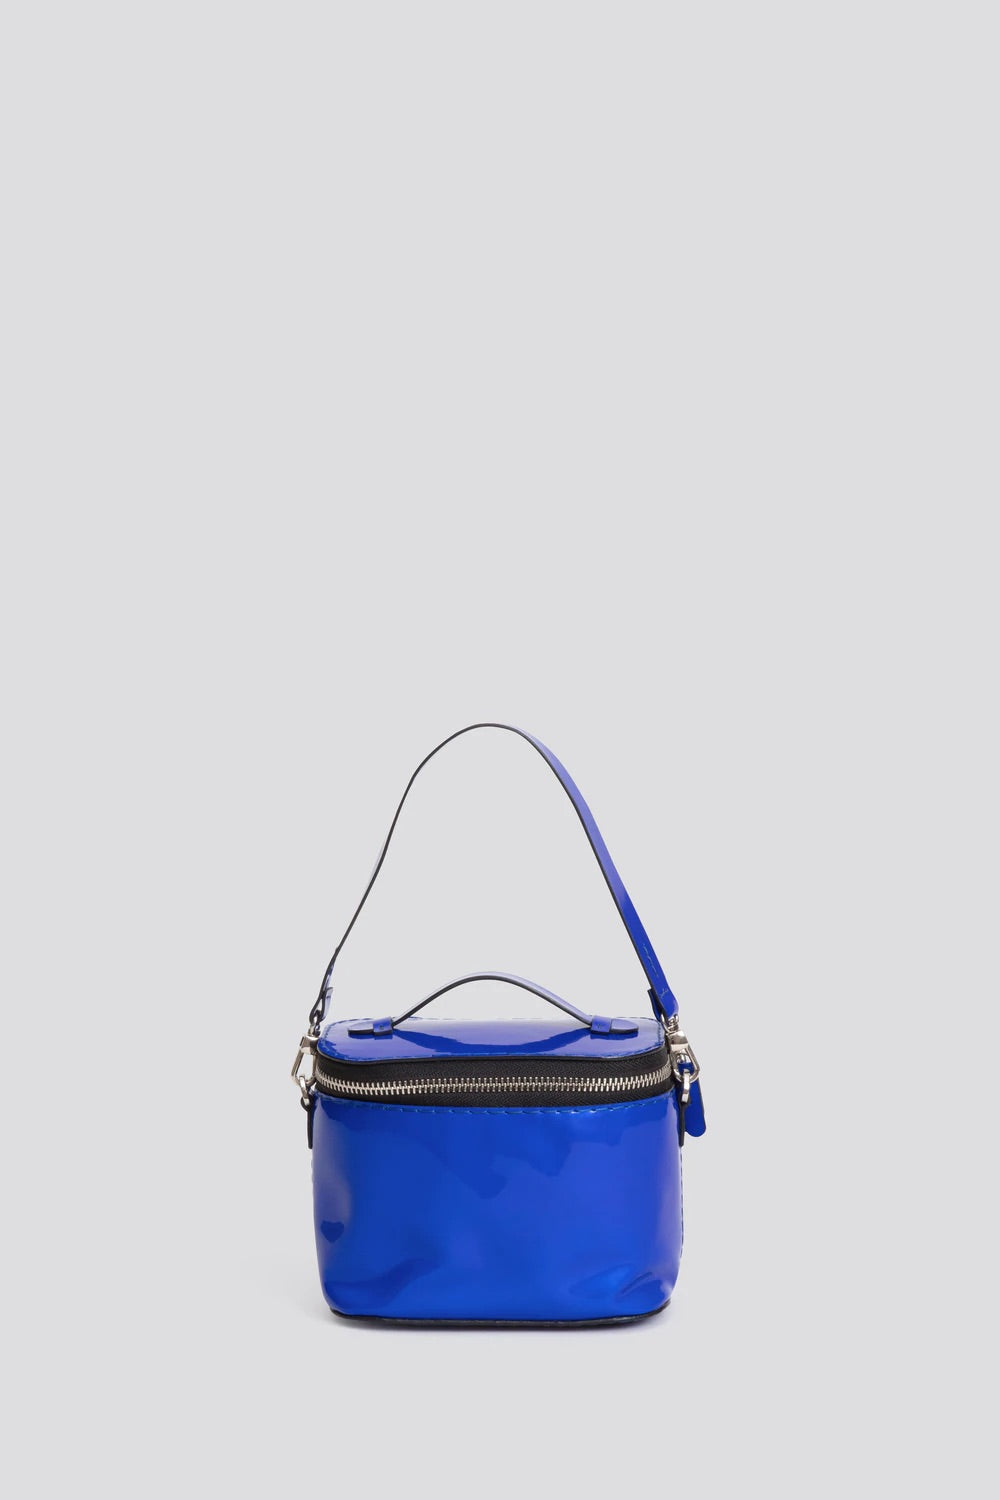 Rachel Comey - Fressia Box Bag: Blue